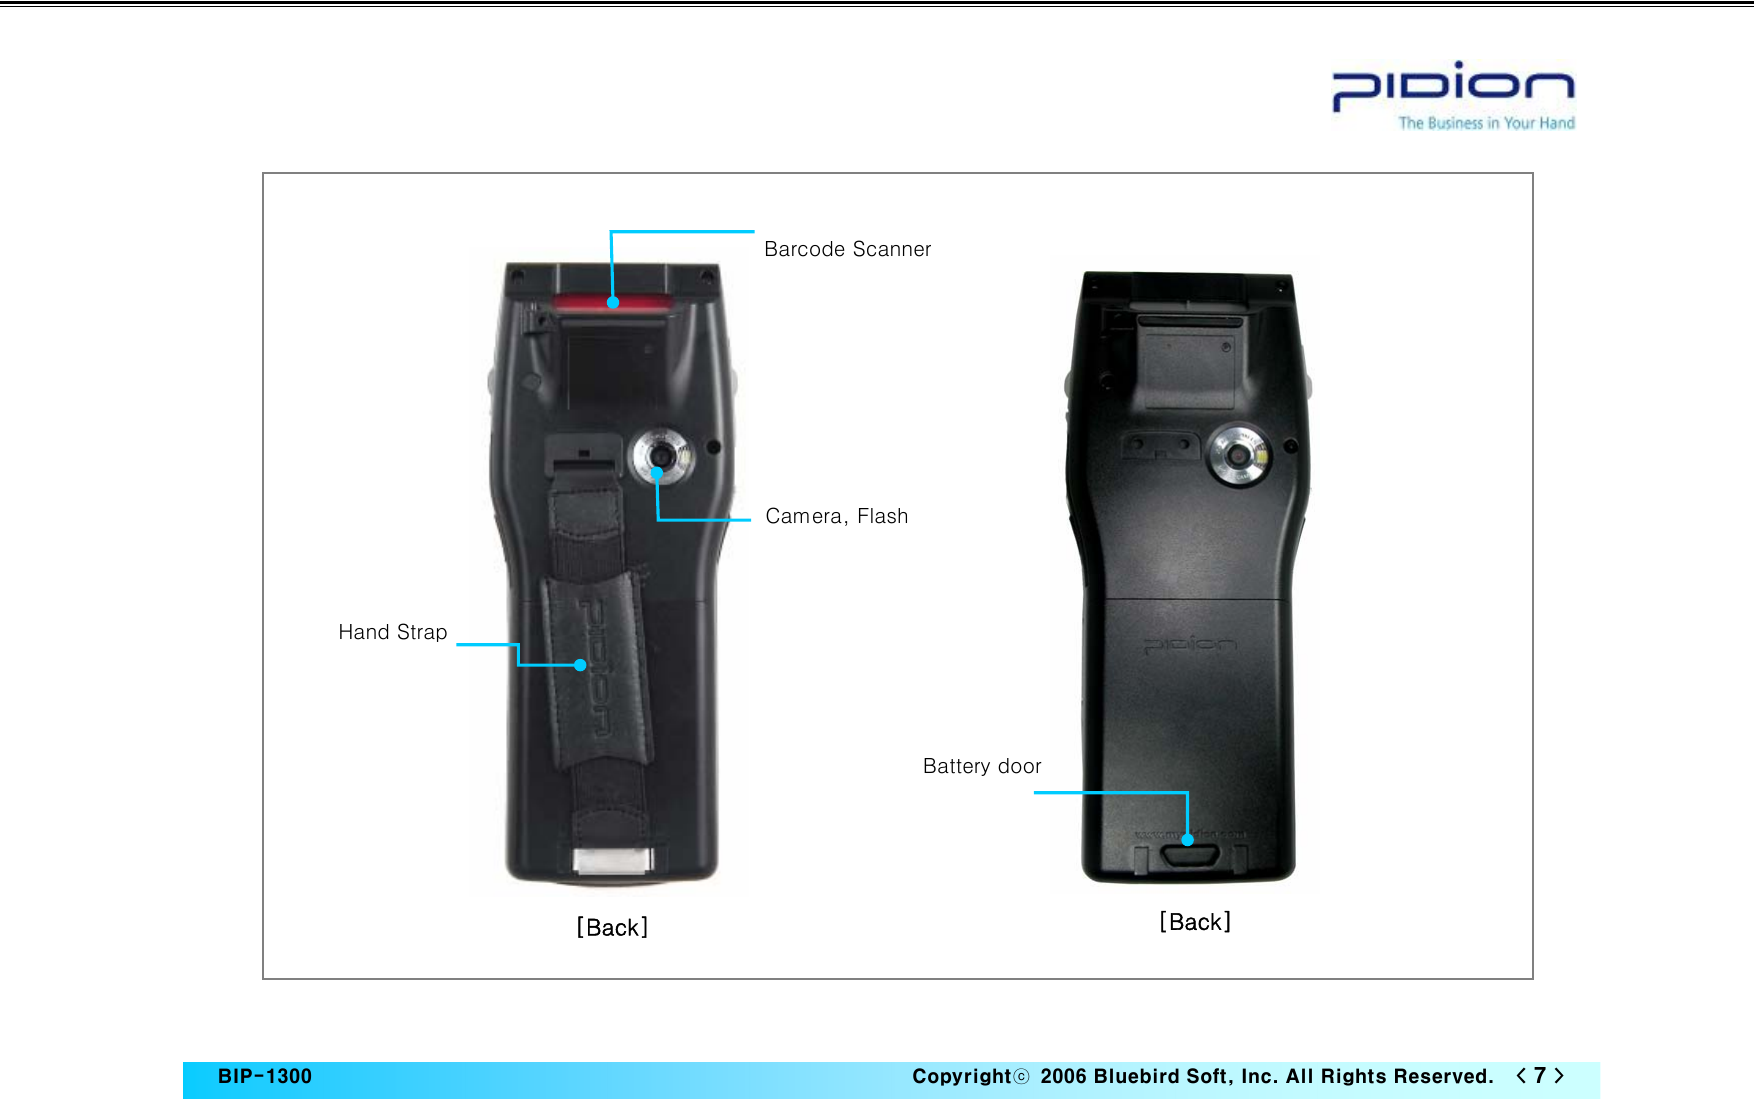   BIP-1300                                                                   Copyrightⓒ  2006 Bluebird Soft, Inc. All Rights Reserved.    &lt; 7 &gt;                           [Back]Barcode Scanner Camera, Flash     Hand Strap Battery door[Back]